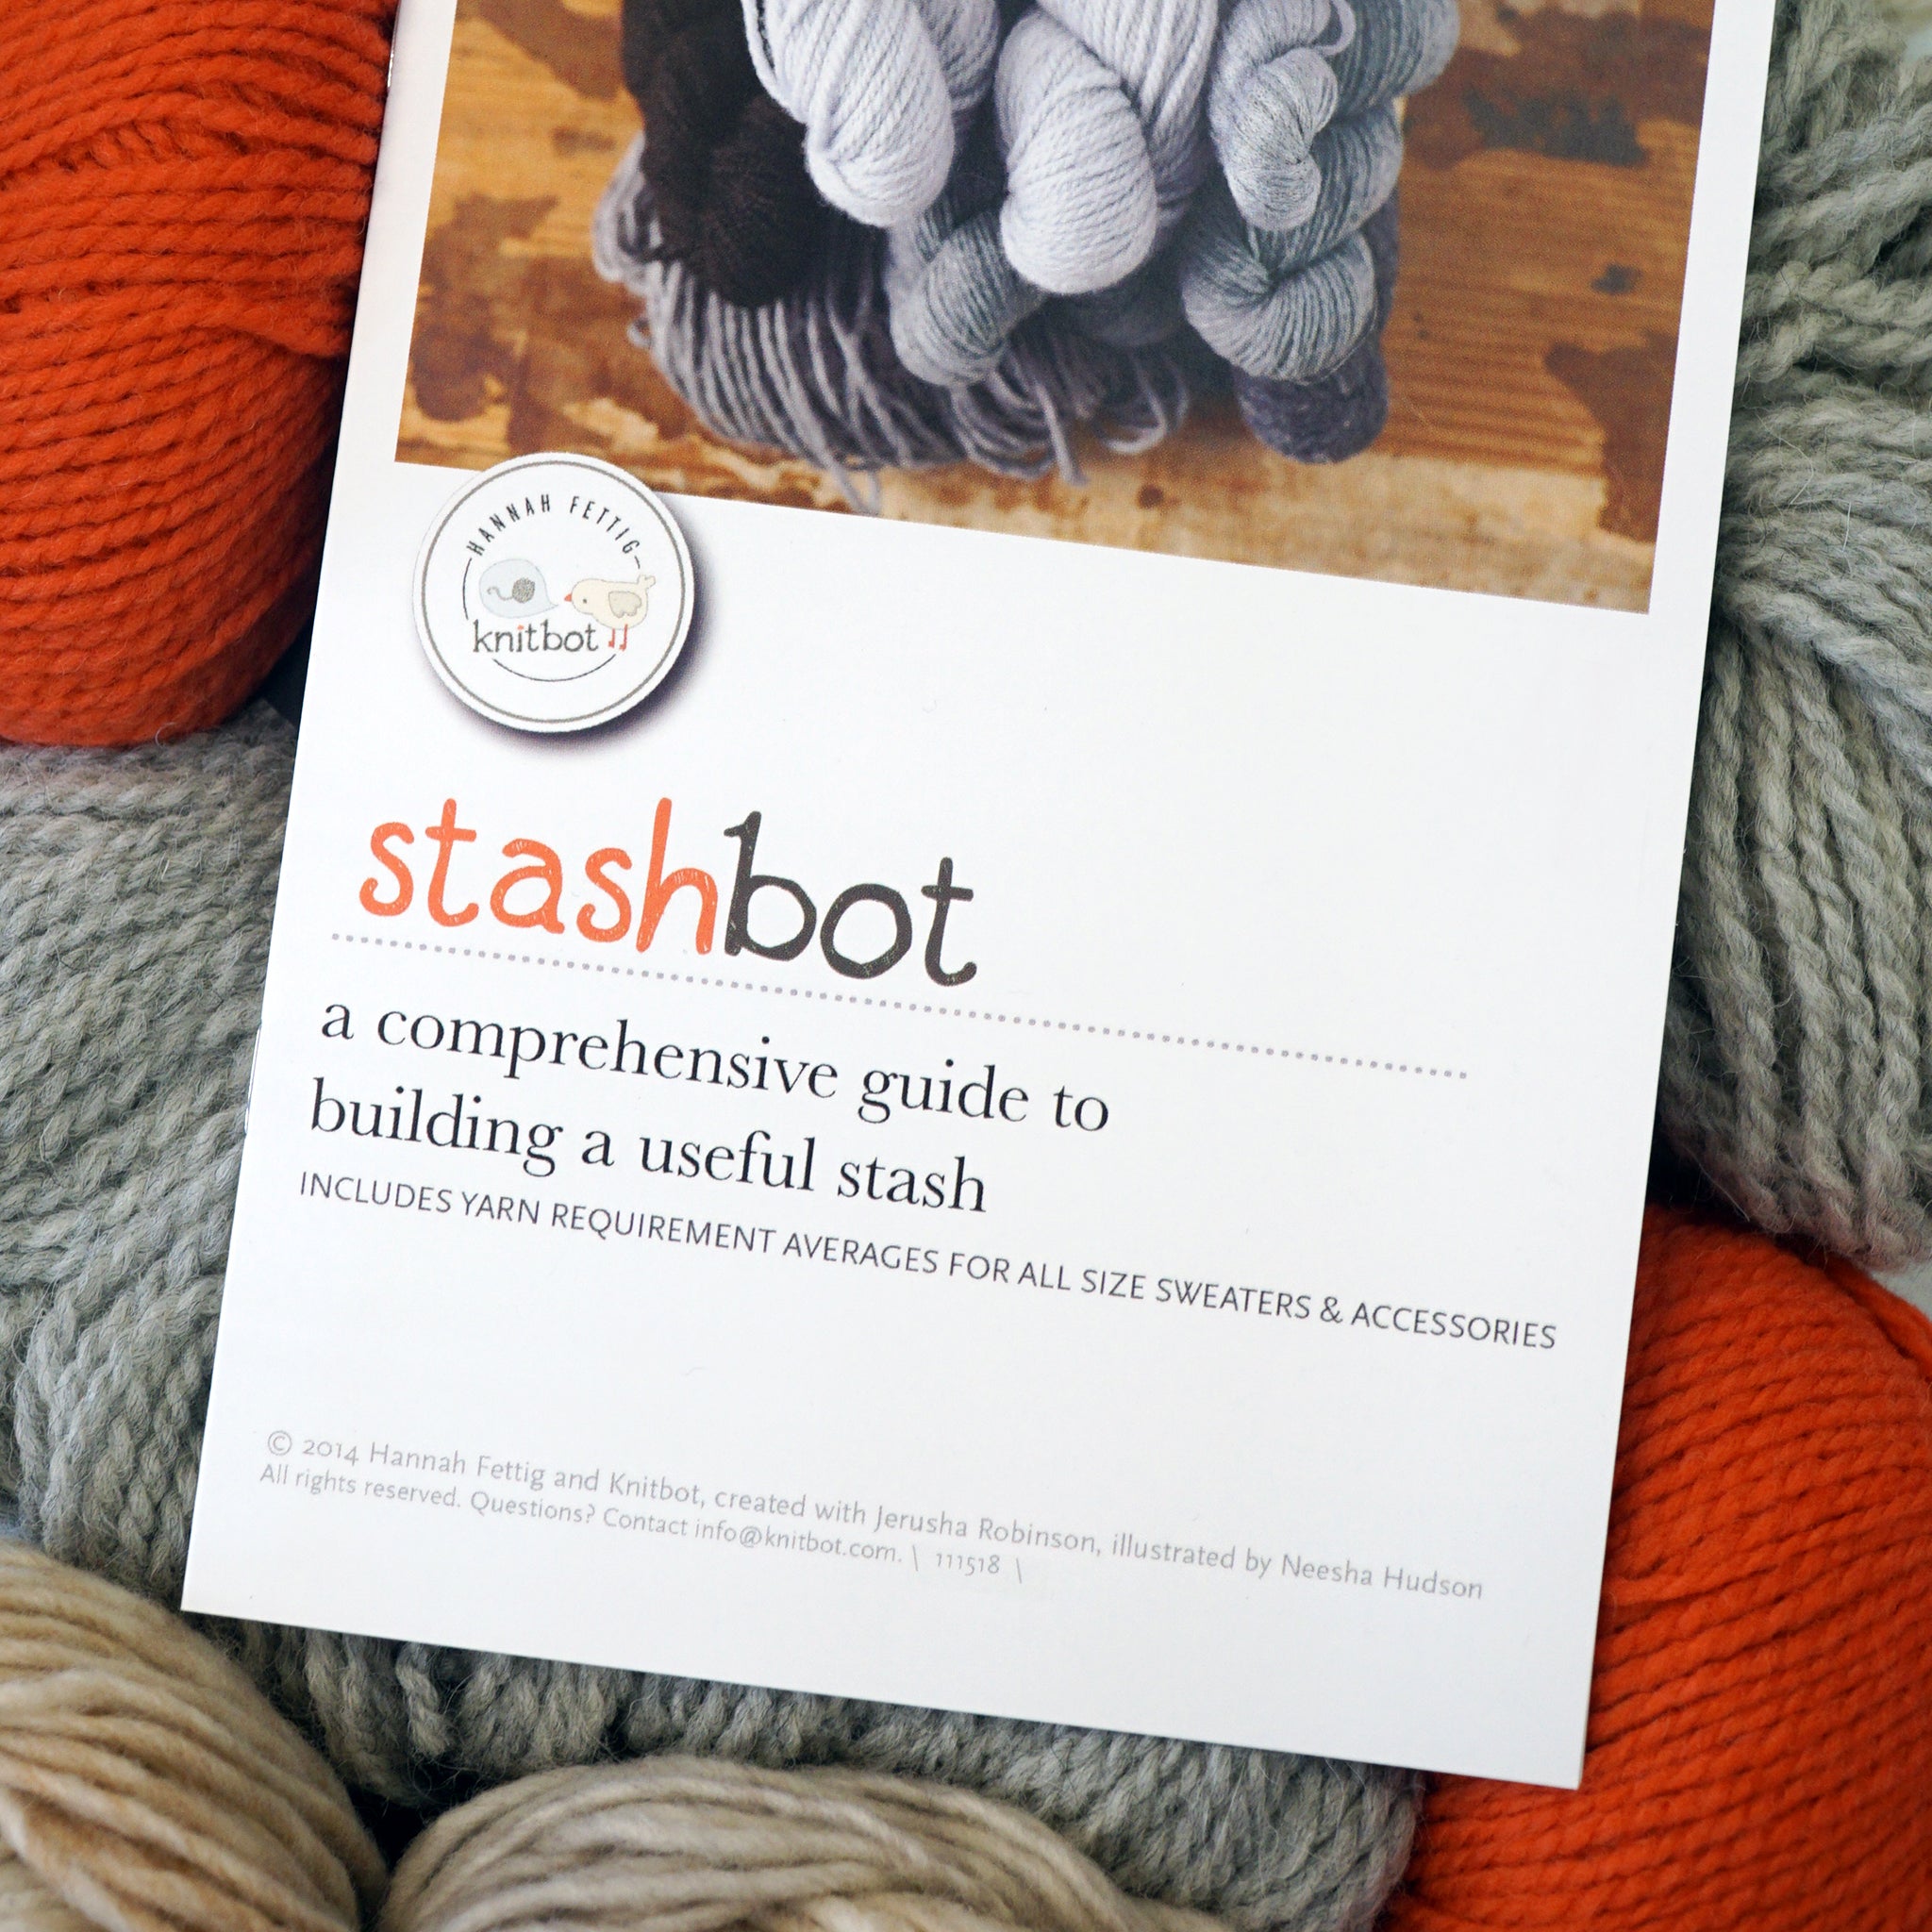 Stashbot: A Comprehensive Guide to Building a Useful Stash